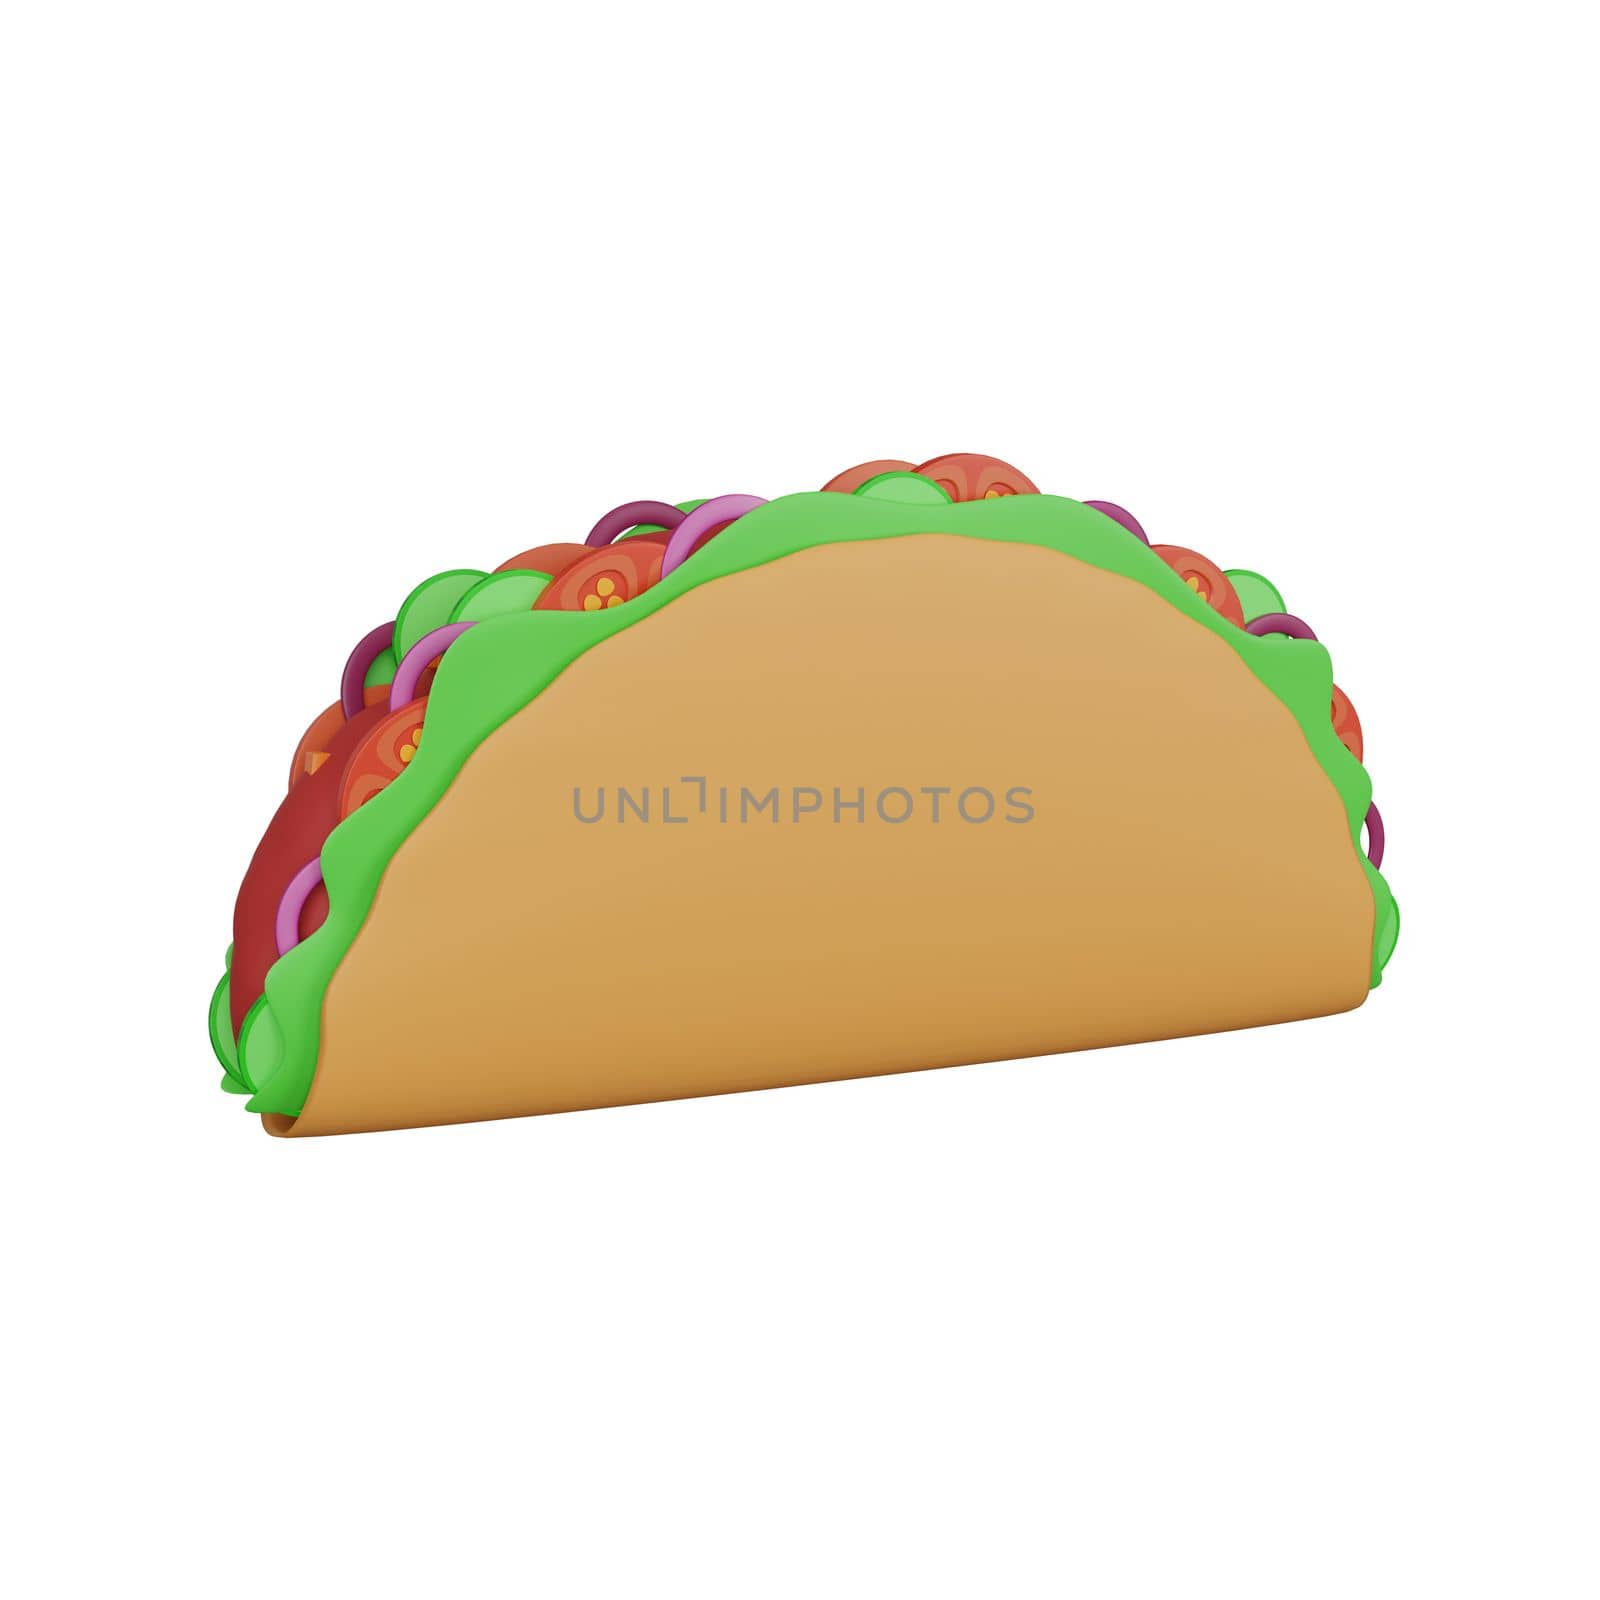 3d rendering of taco fast food icon by Rahmat_Djayusman